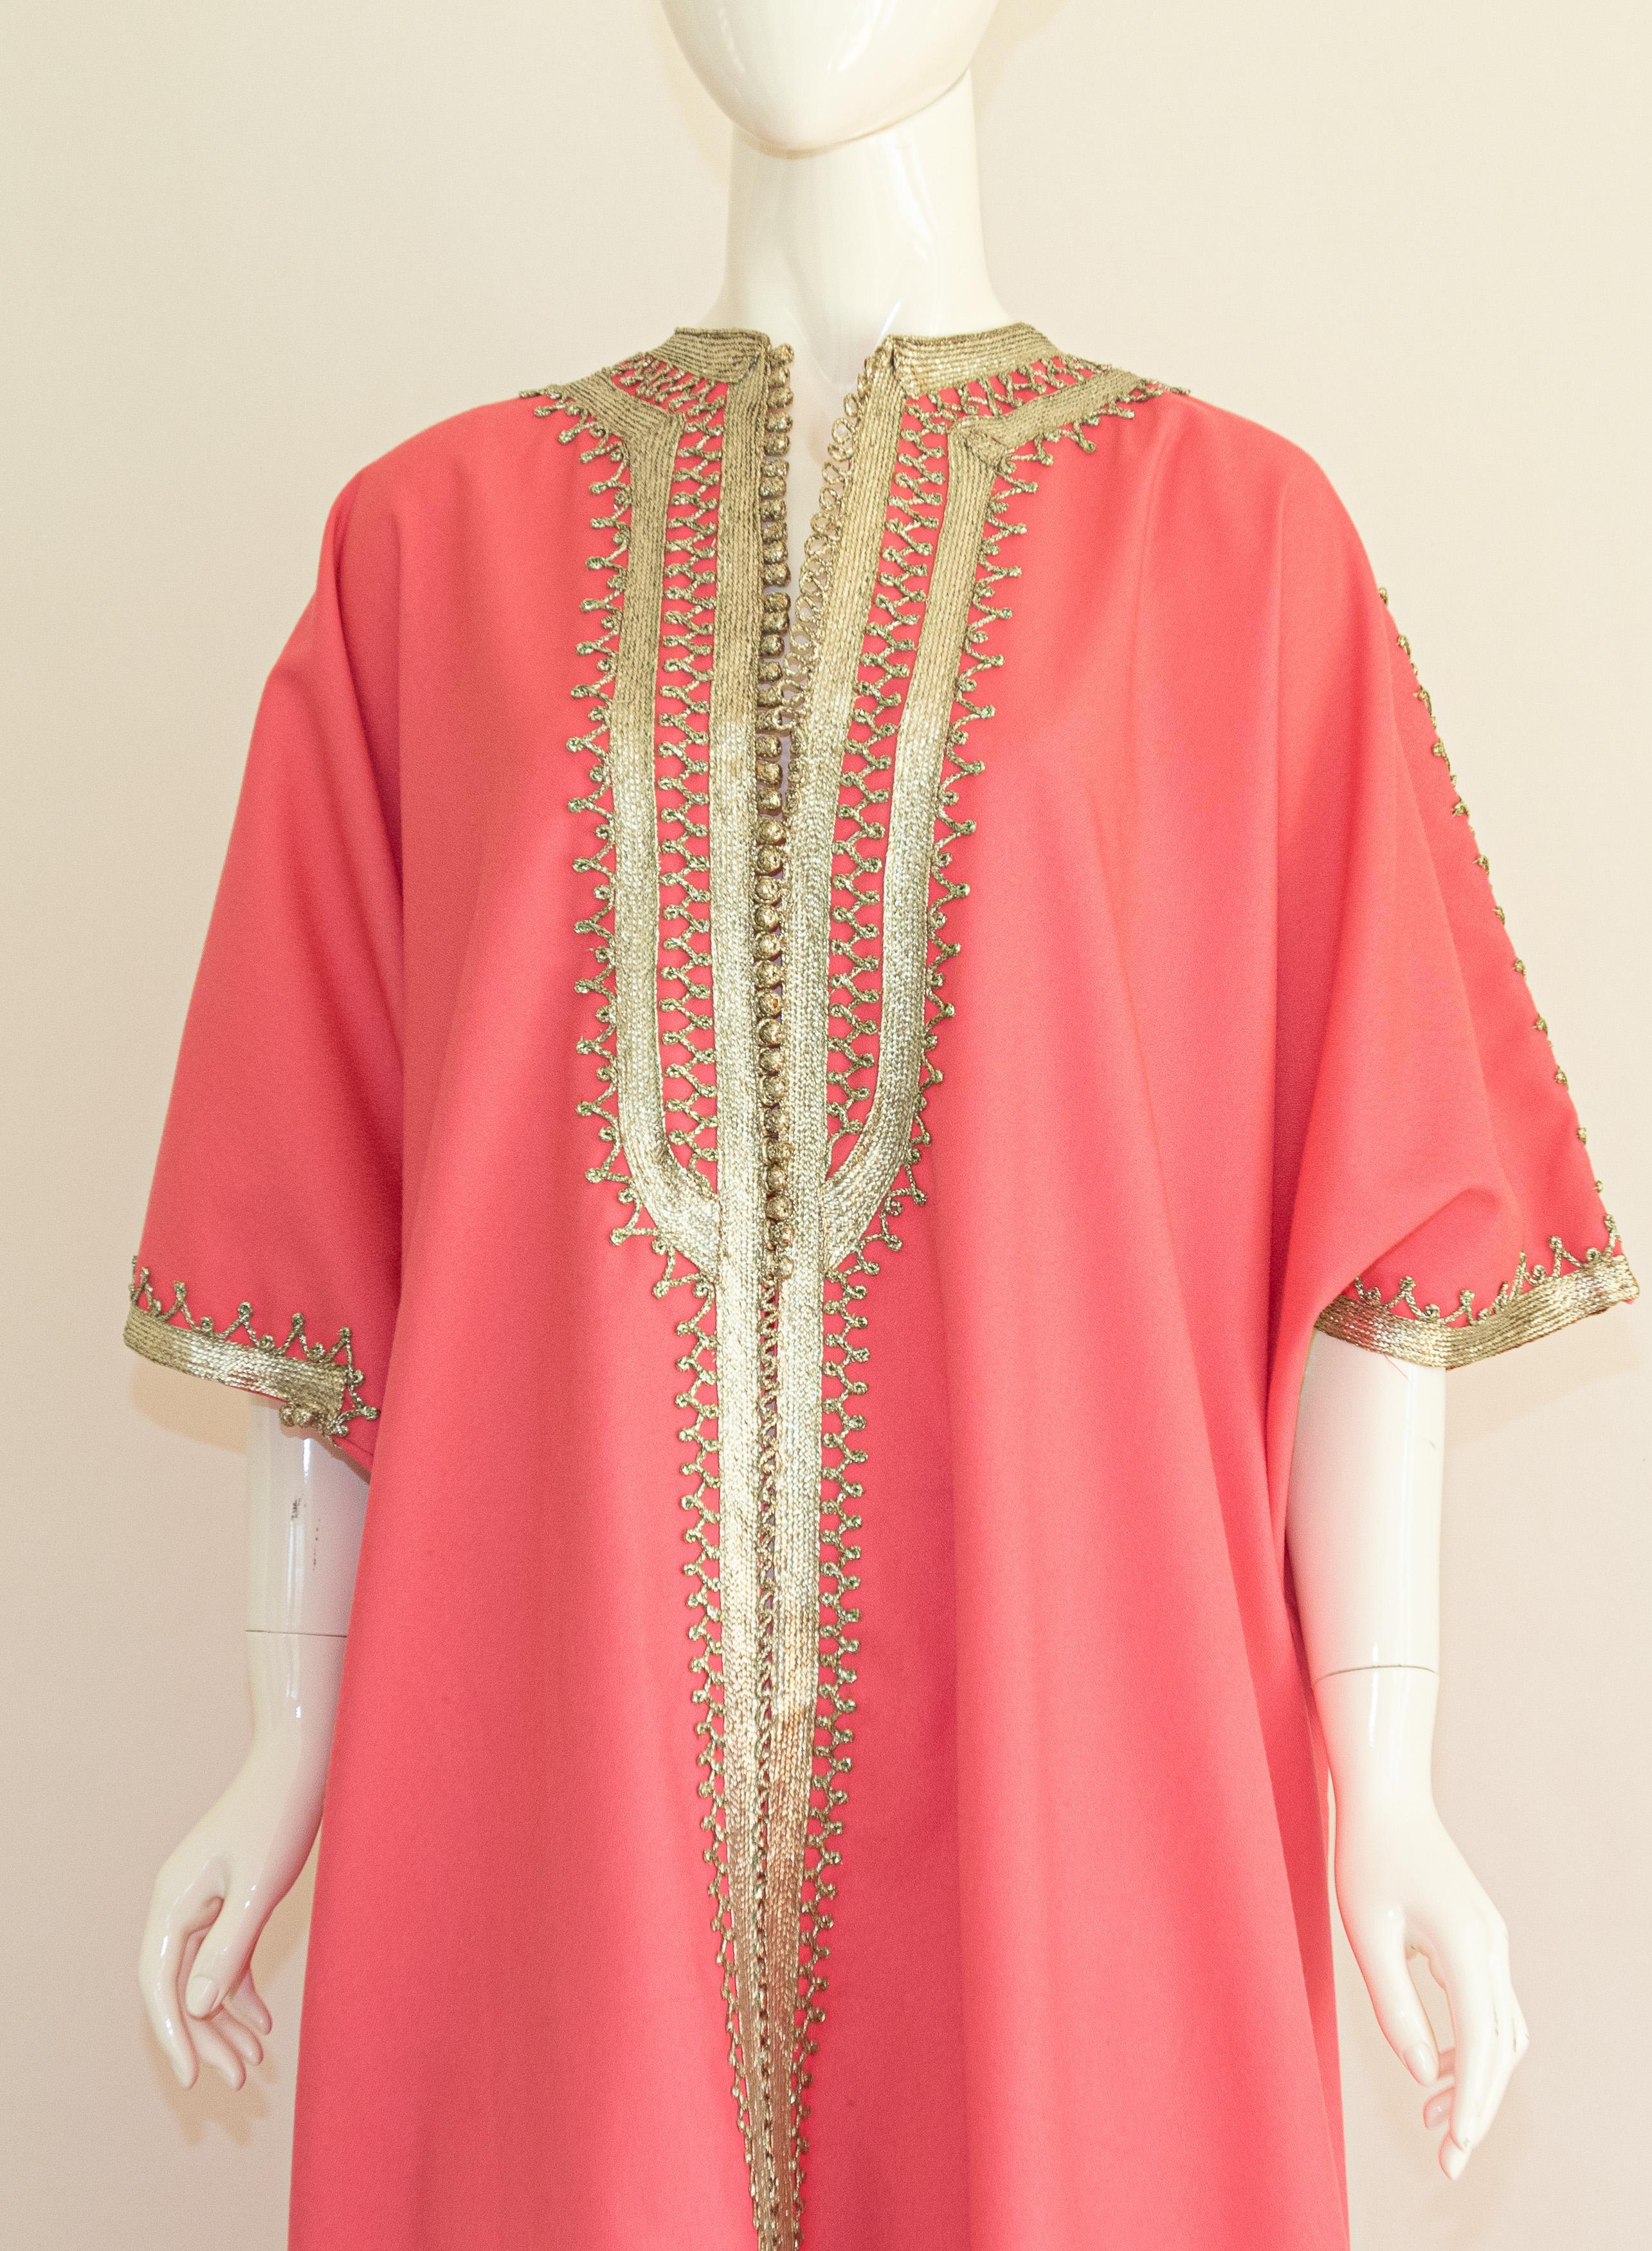 Women's or Men's Moroccan Caftan Pink Color with Silver Trim, Vintage Kaftan circa 1970 For Sale